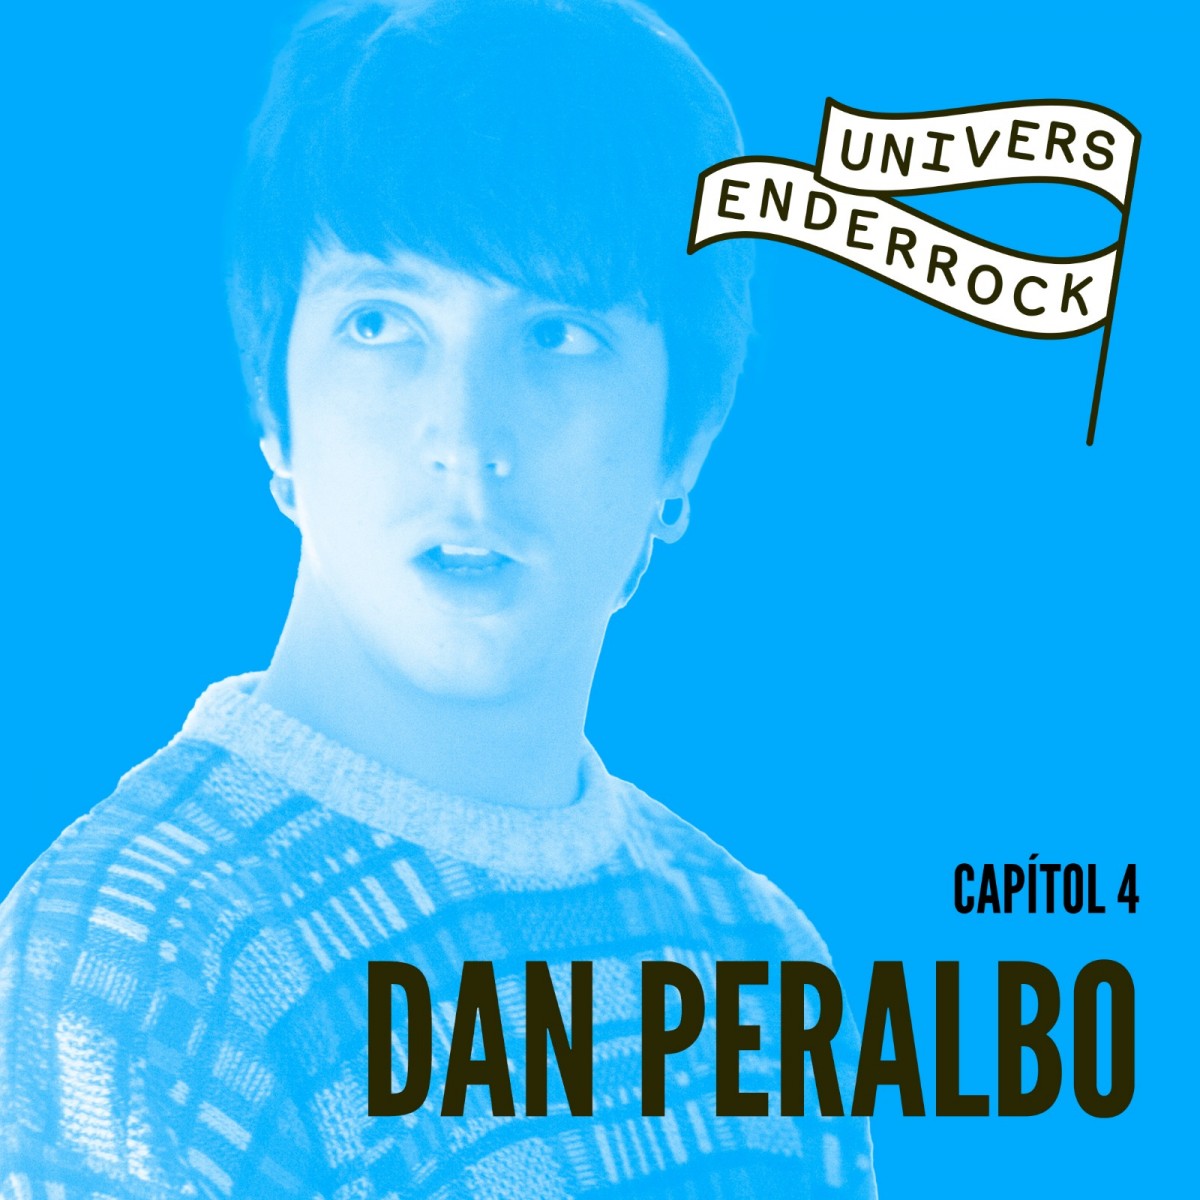 Quart episodi d''Univers Enderrock' amb Dan Peralbo